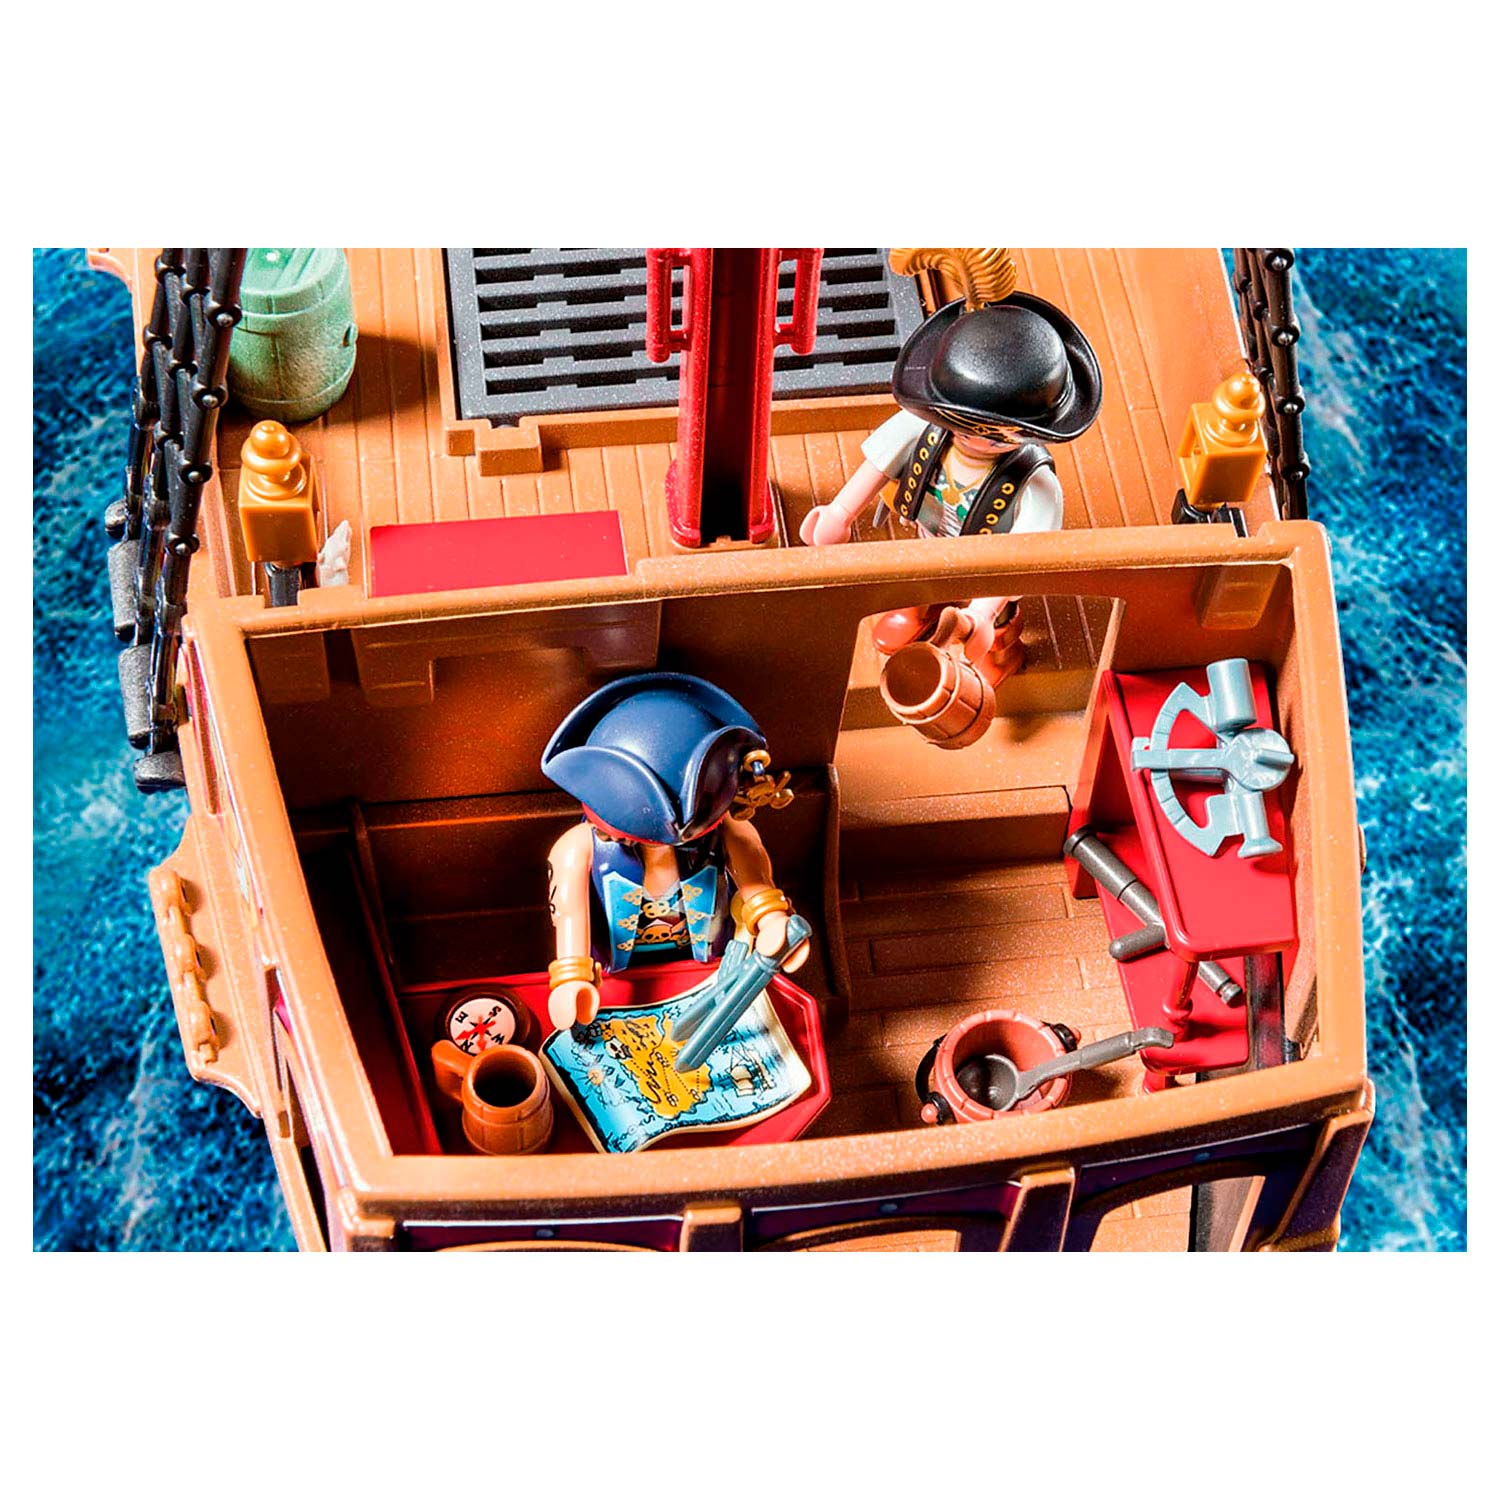 Playmobil Pirates Piratenschip, 132dlg. - 70411